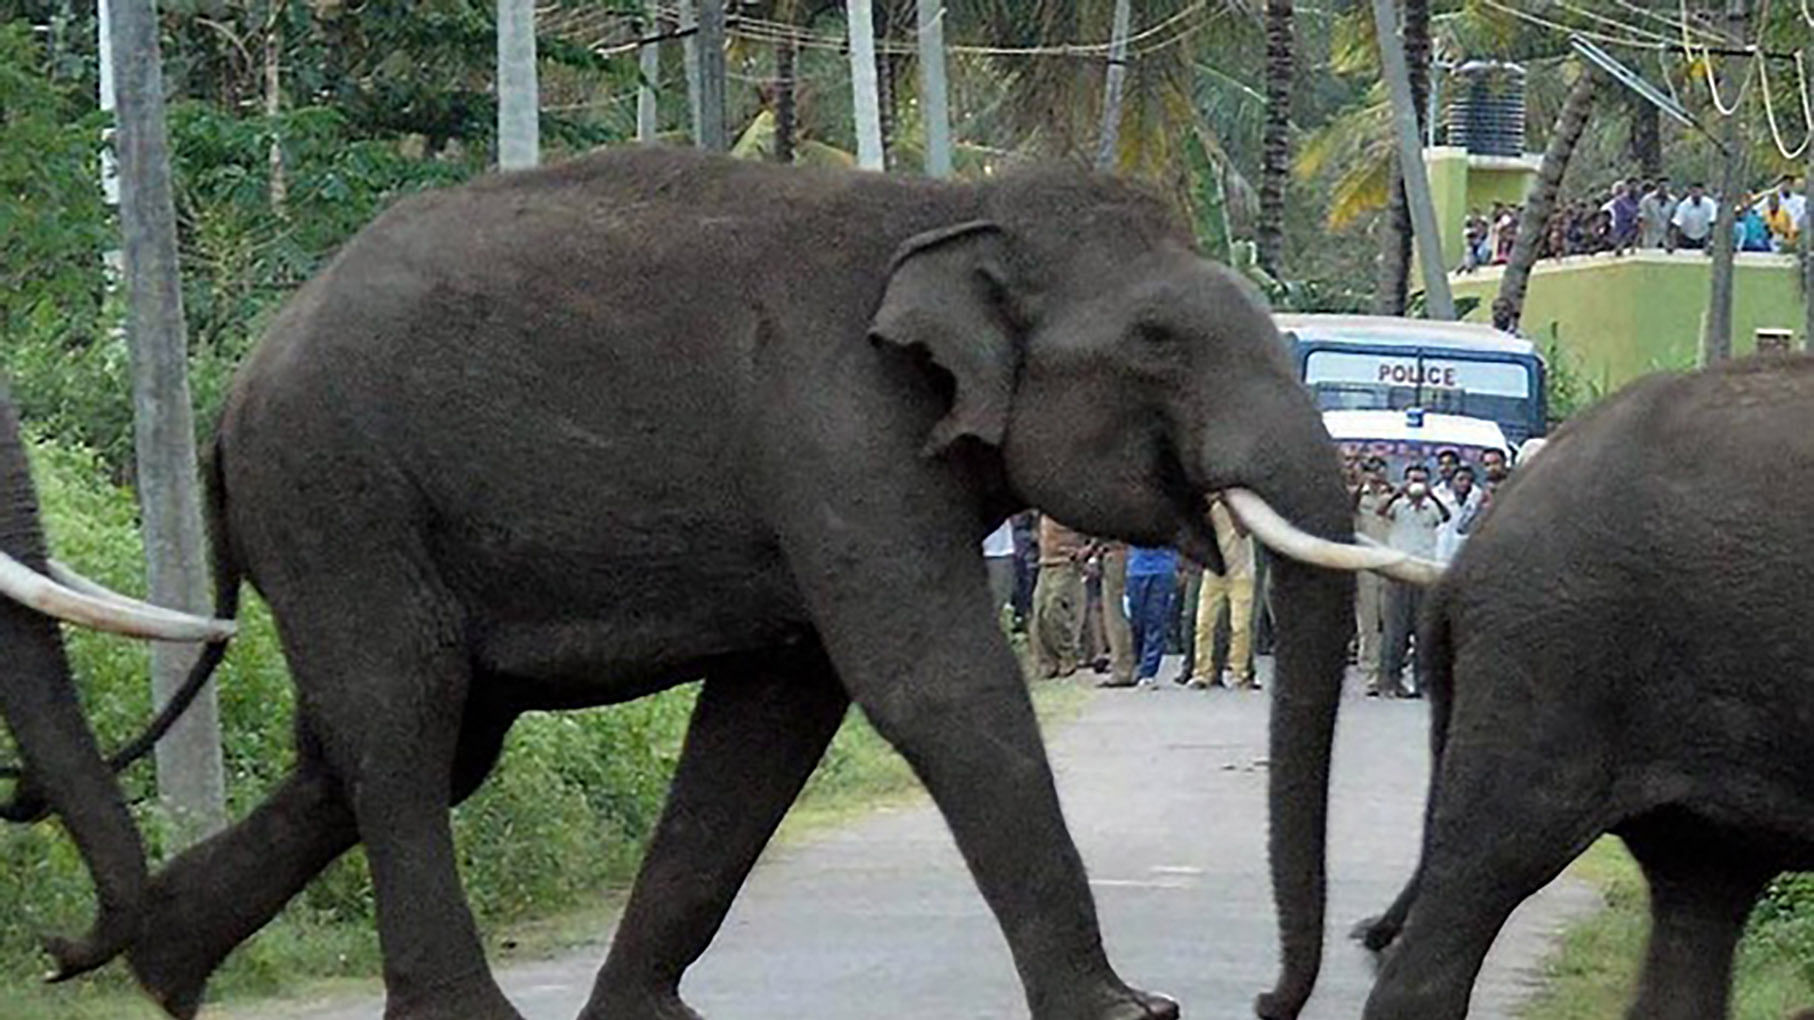 Elephants crossing a road in Tamil Nadu. (Photo: PTI)